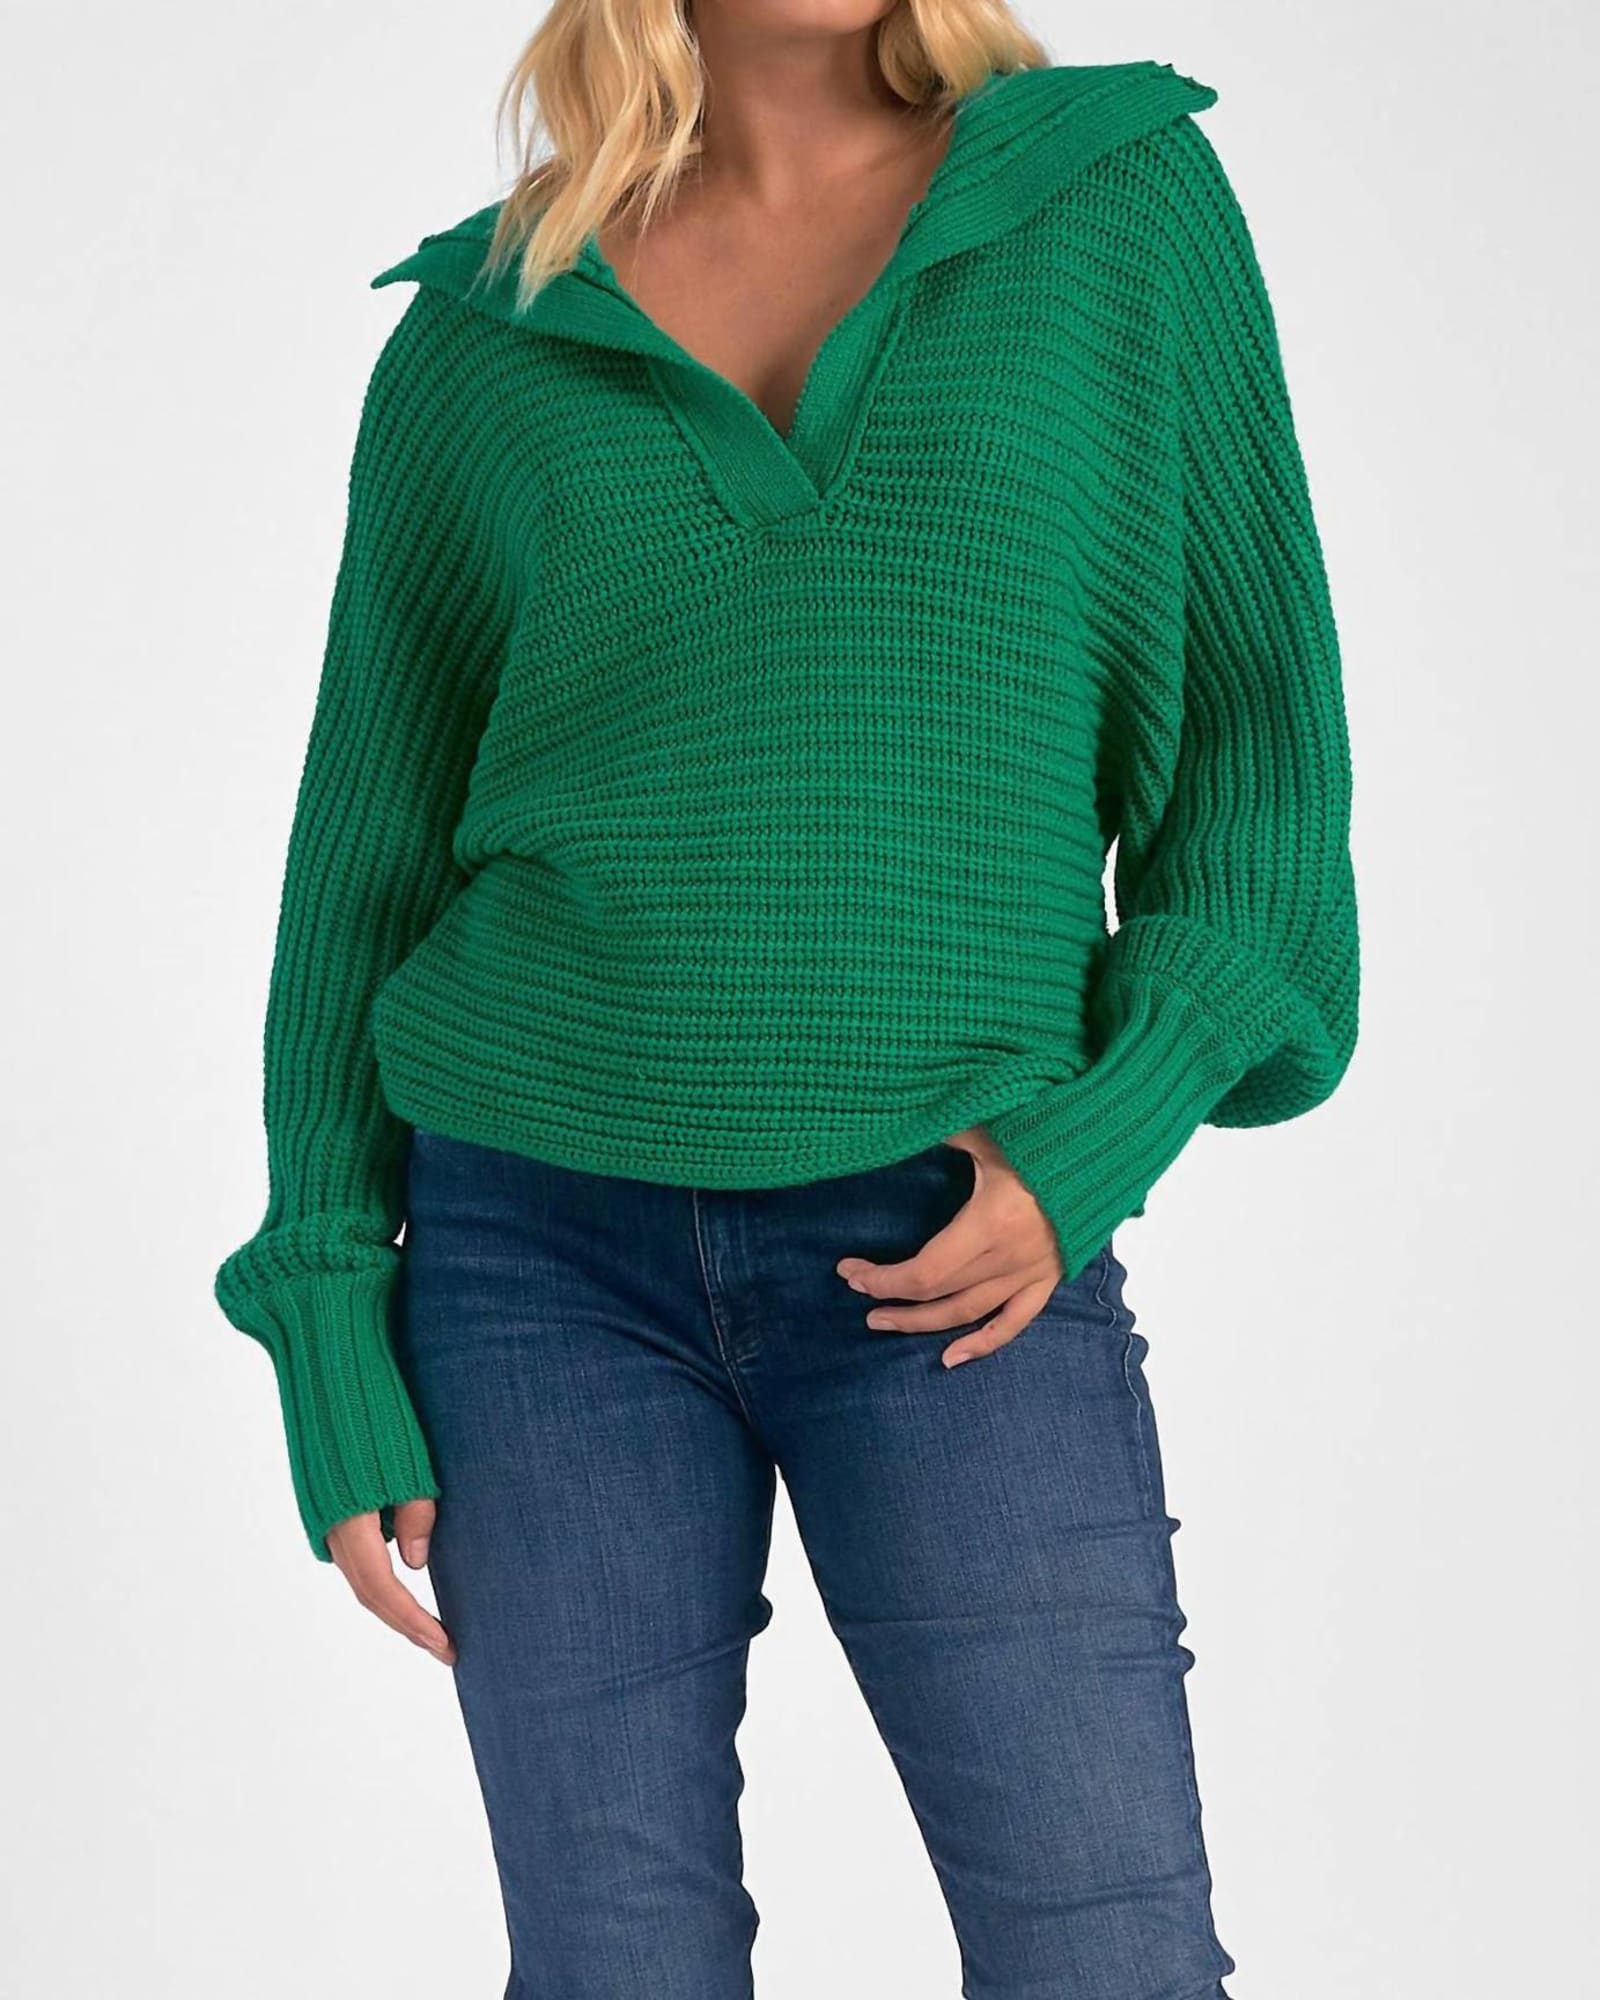 Savannah Collared Sweater in Kelly Green | Kelly Green